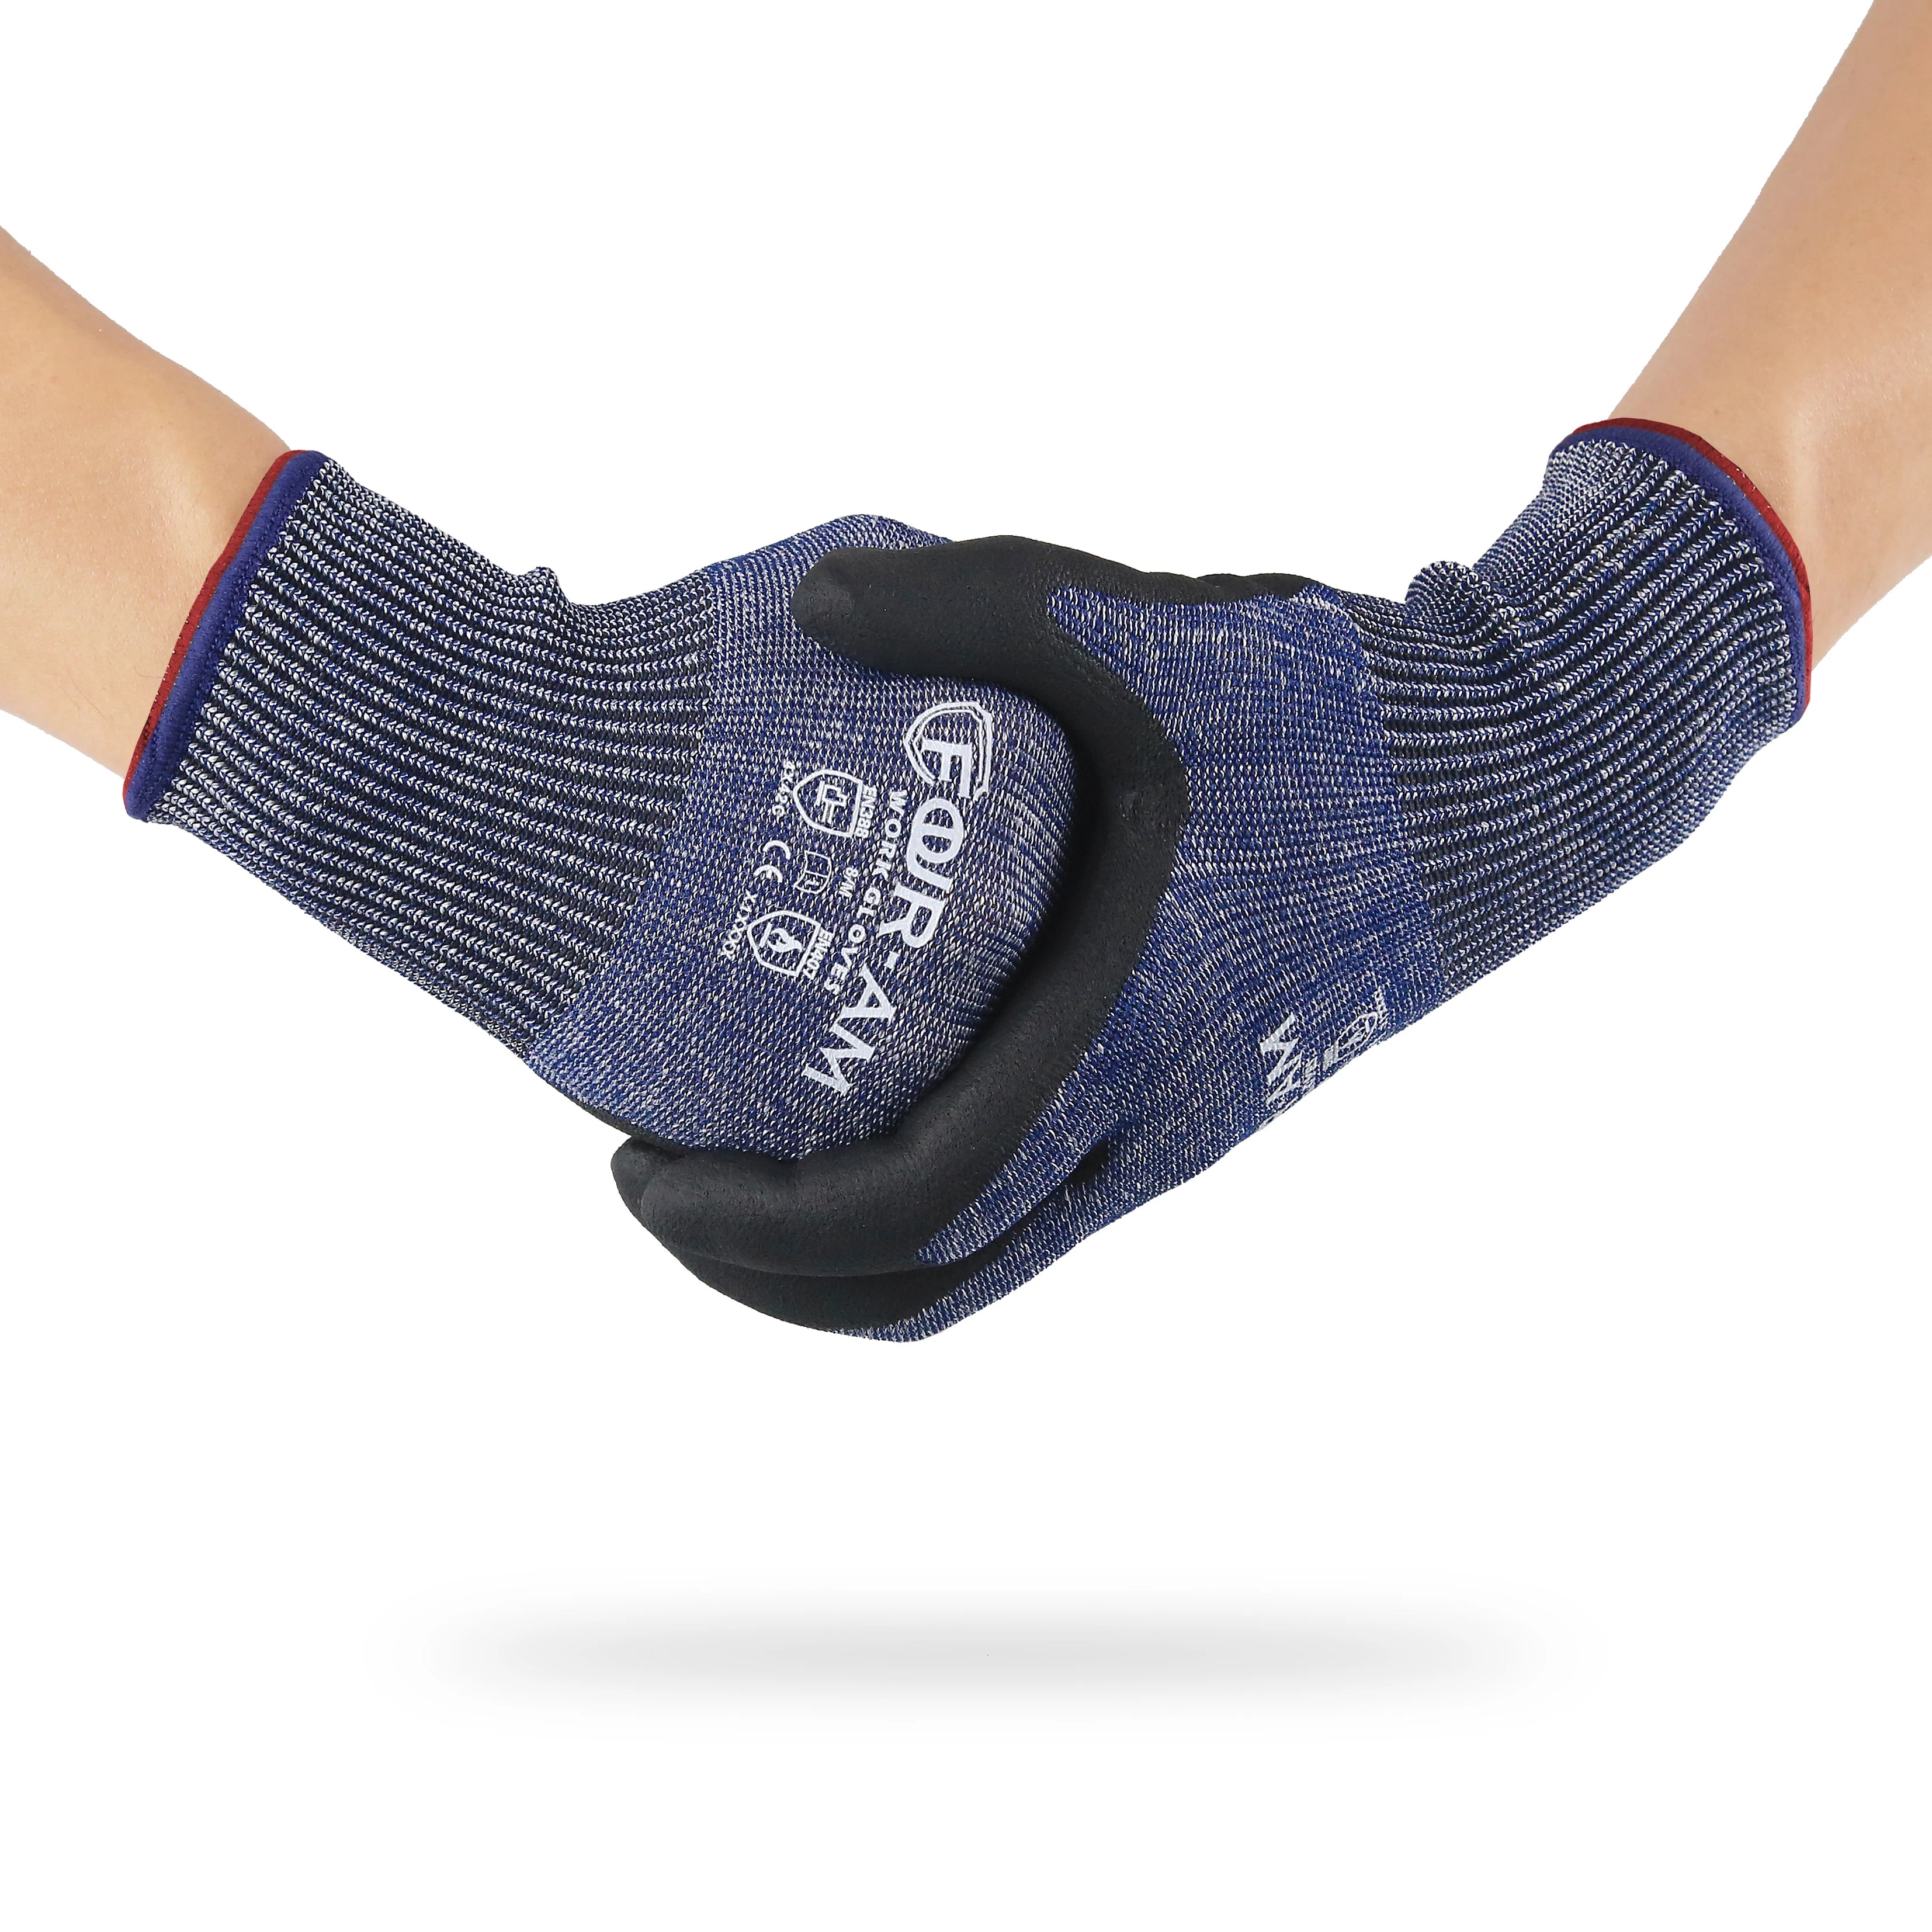 Cut-Resistant Gloves, Non-Slip Grip, Durable & Breathable